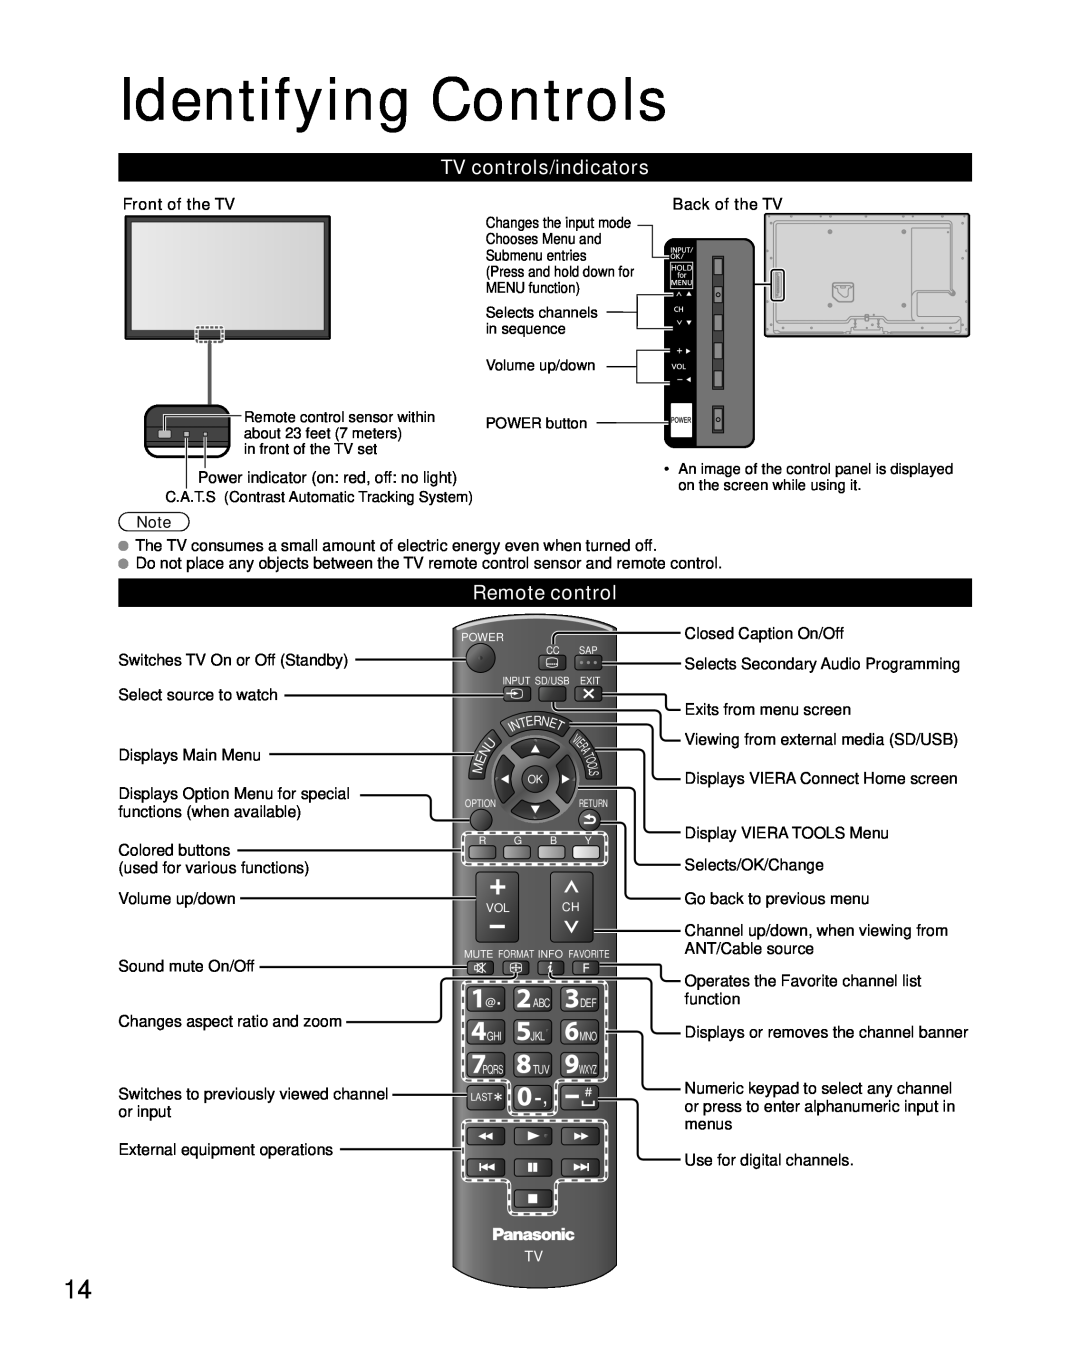 Panasonic TC-L55ET5 Identifying Controls, TV controls/indicators, Remote control, Front of the TV, Closed Caption On/Off 